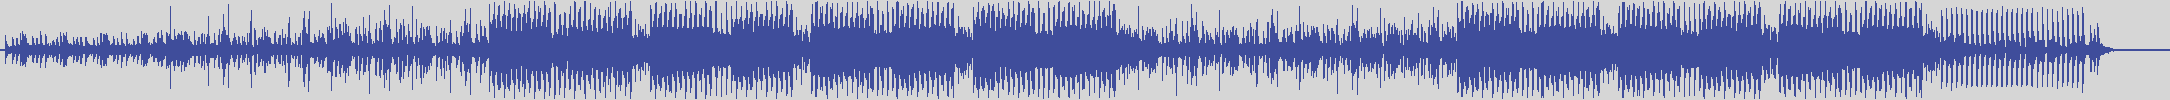 nf_boyz_records [NFY043] Martin Sarrin - Lumpen [Mark Tampon Mix] audio wave form